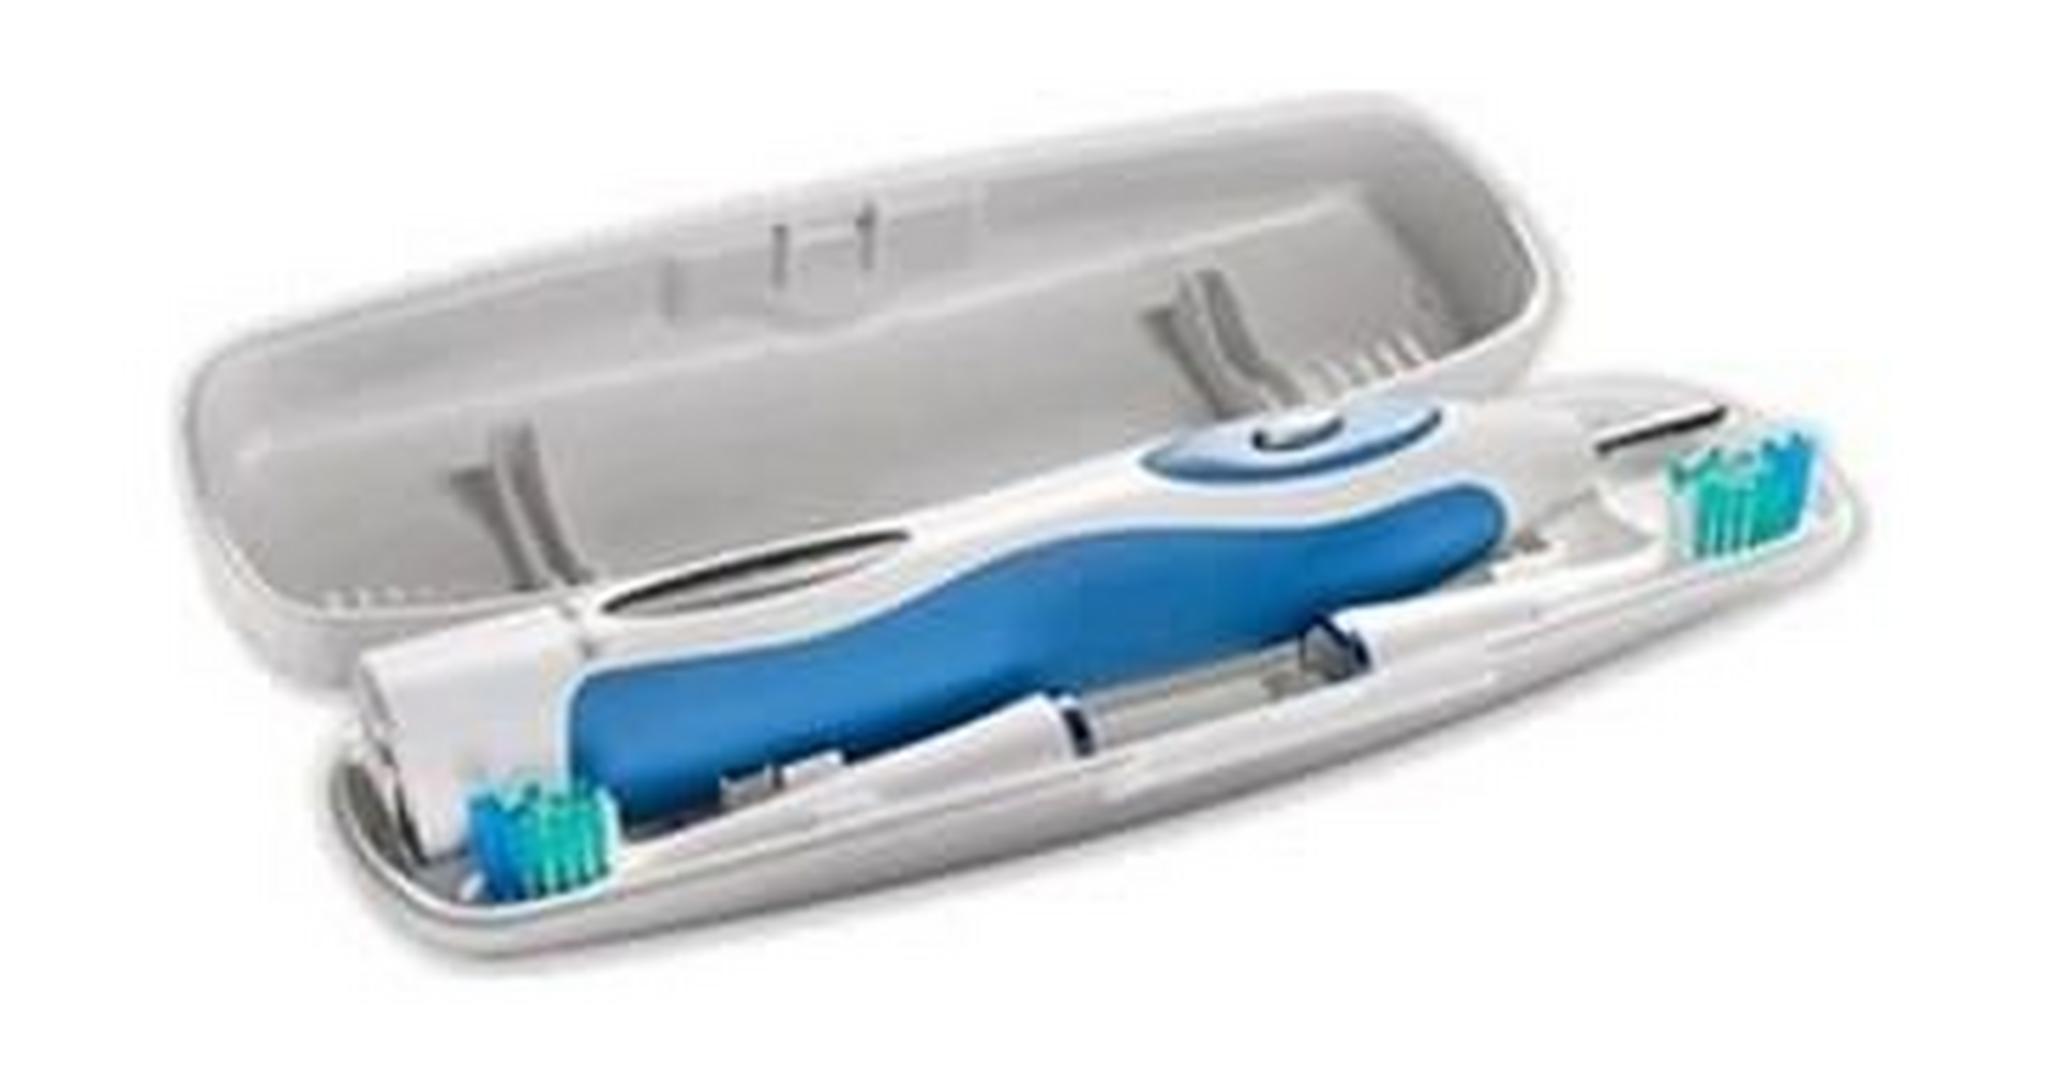 Waterpik Complete Care Flosser + Toothbrush (WP-900E2) - Blue